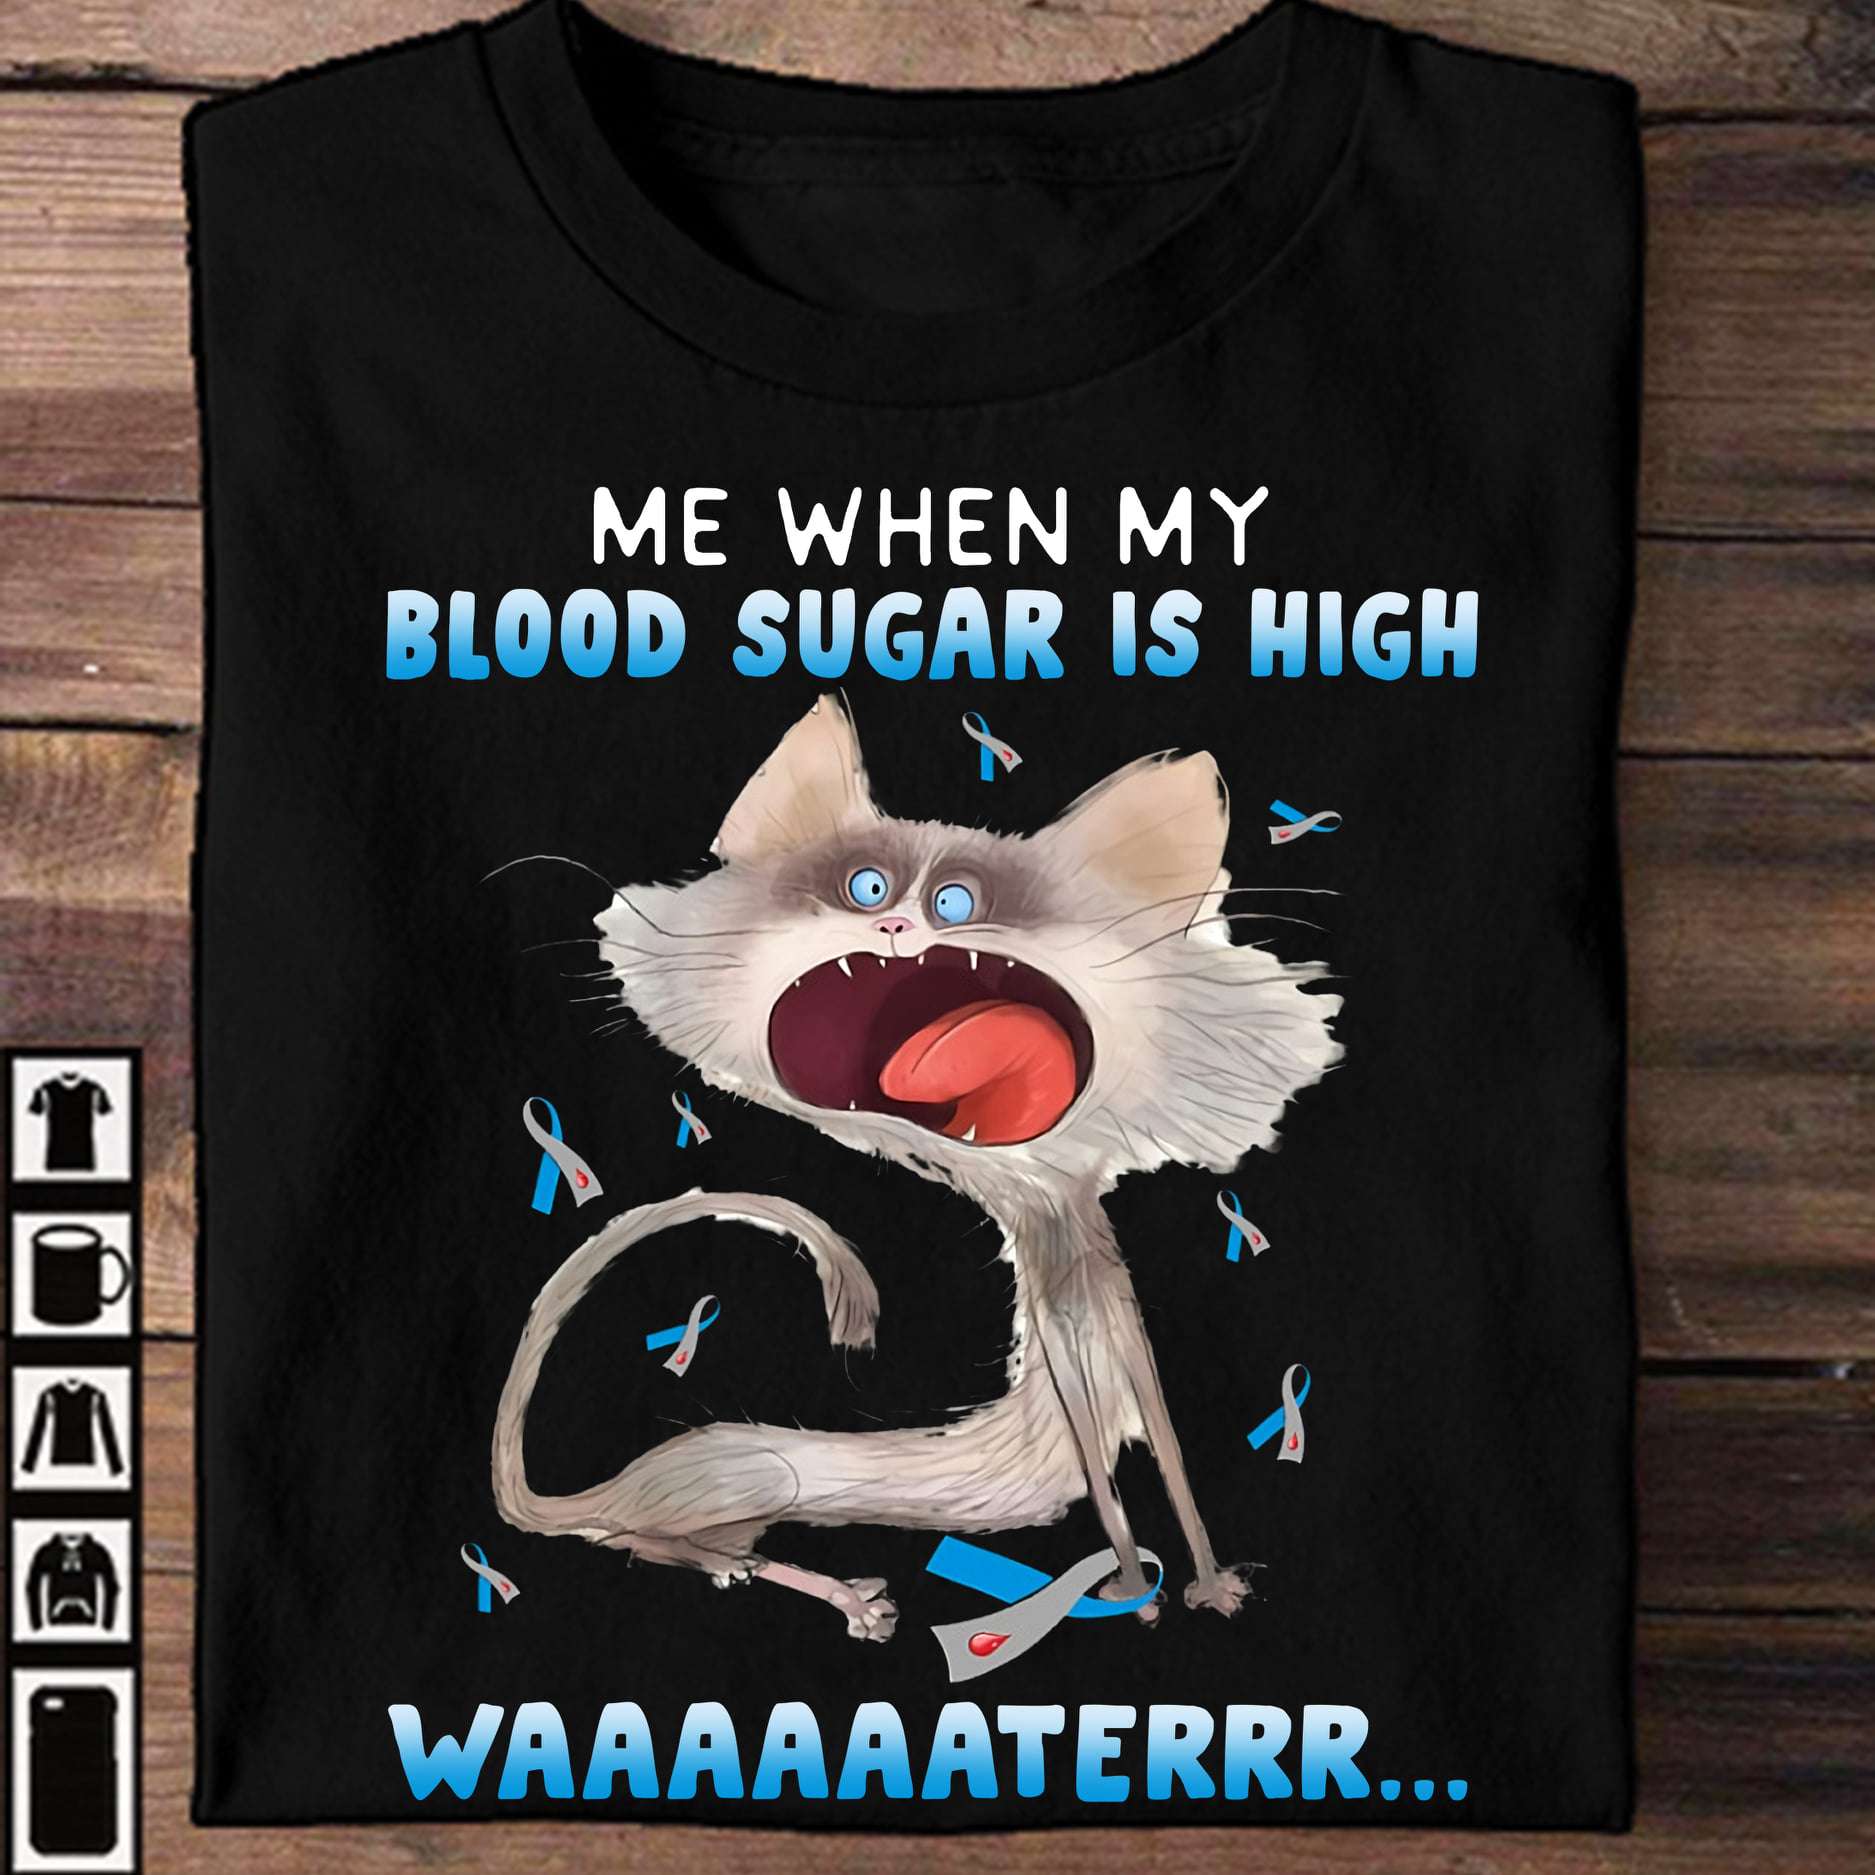 Diabetes Cat - Me when my blood sugar is high waaaaterr